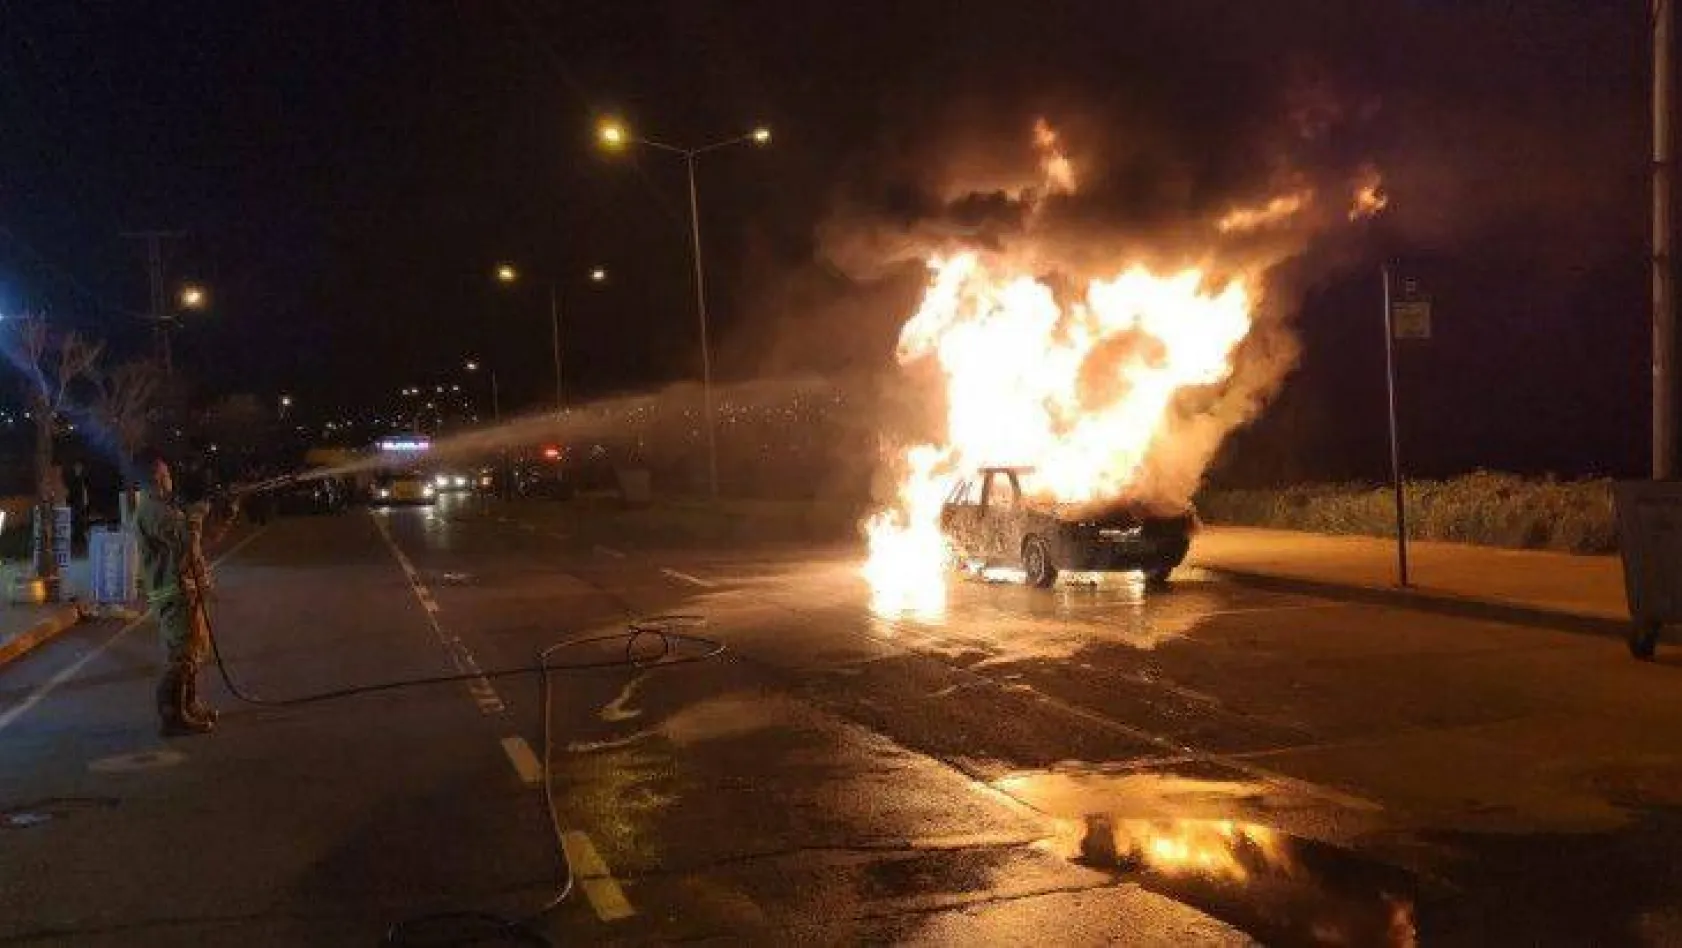 Arnavutköy'de otomobil alev alev yandı